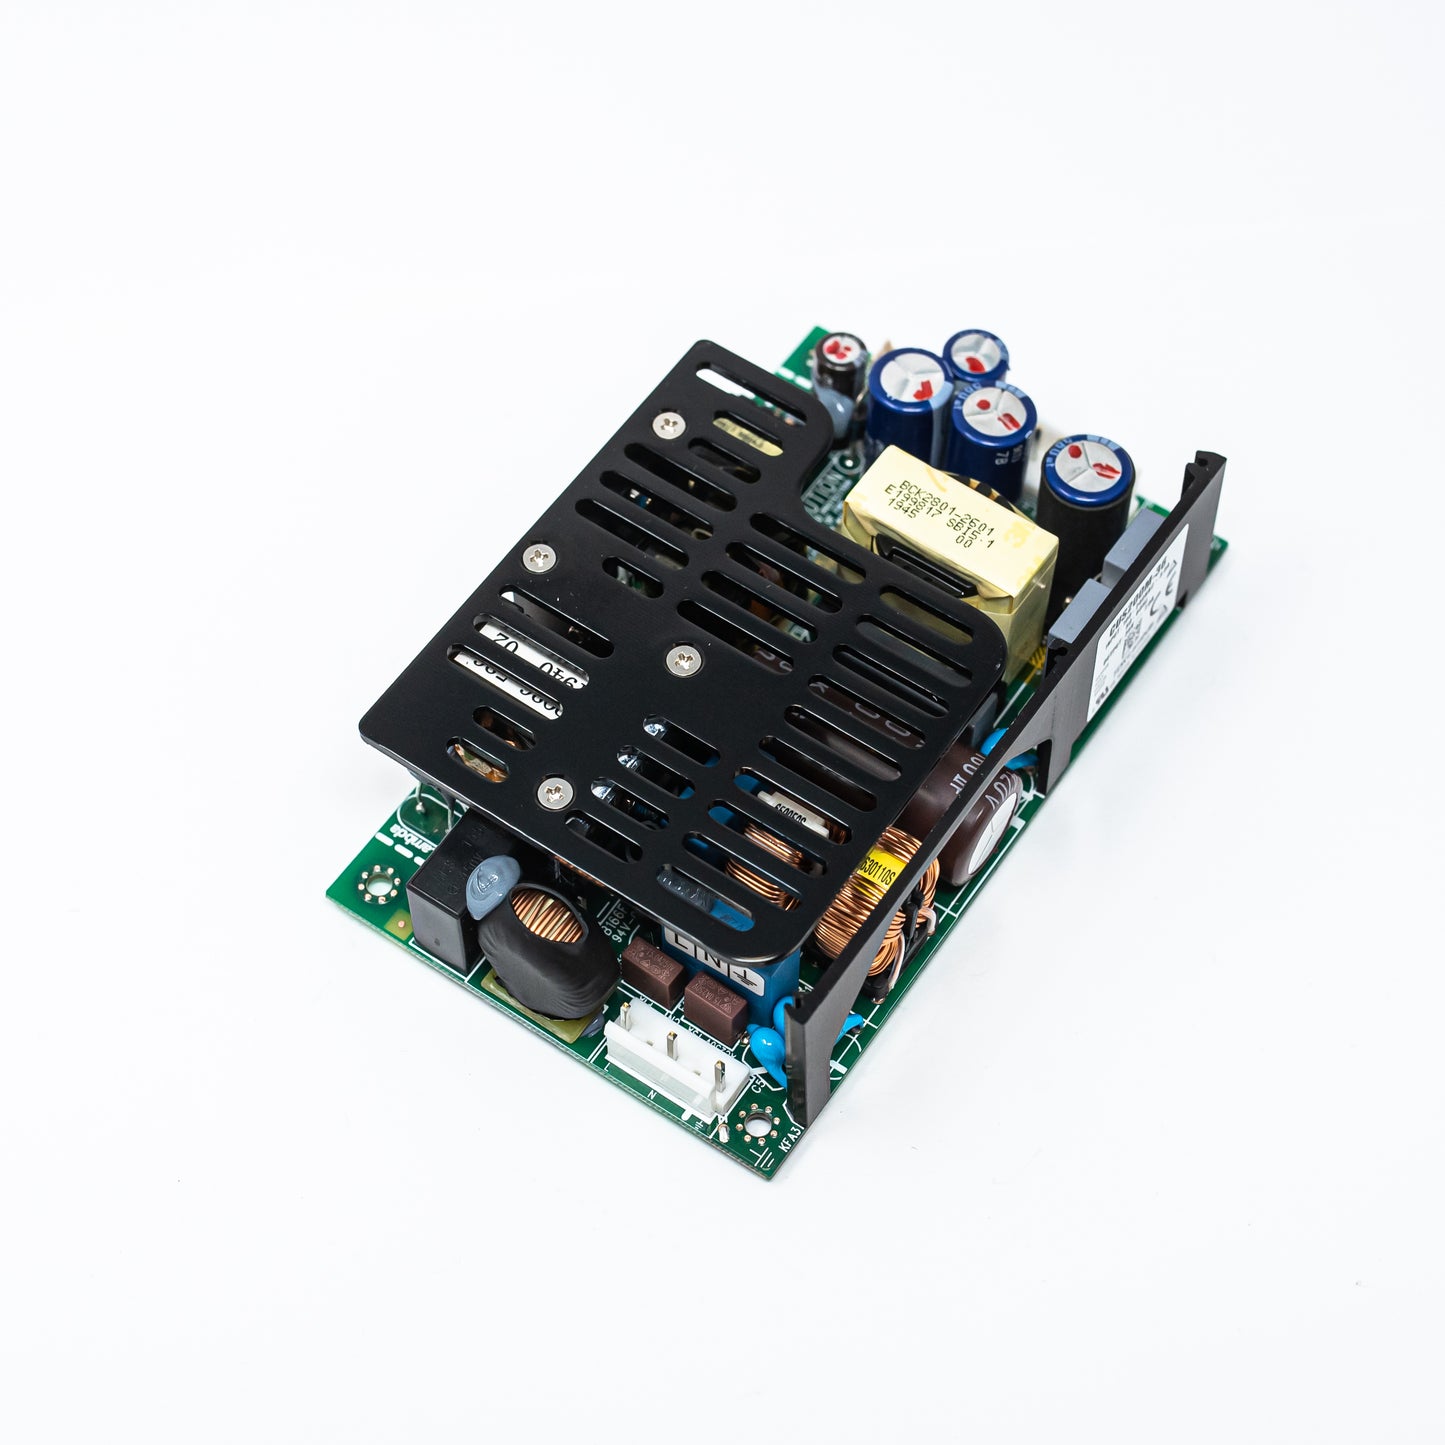 Power supply circuit board